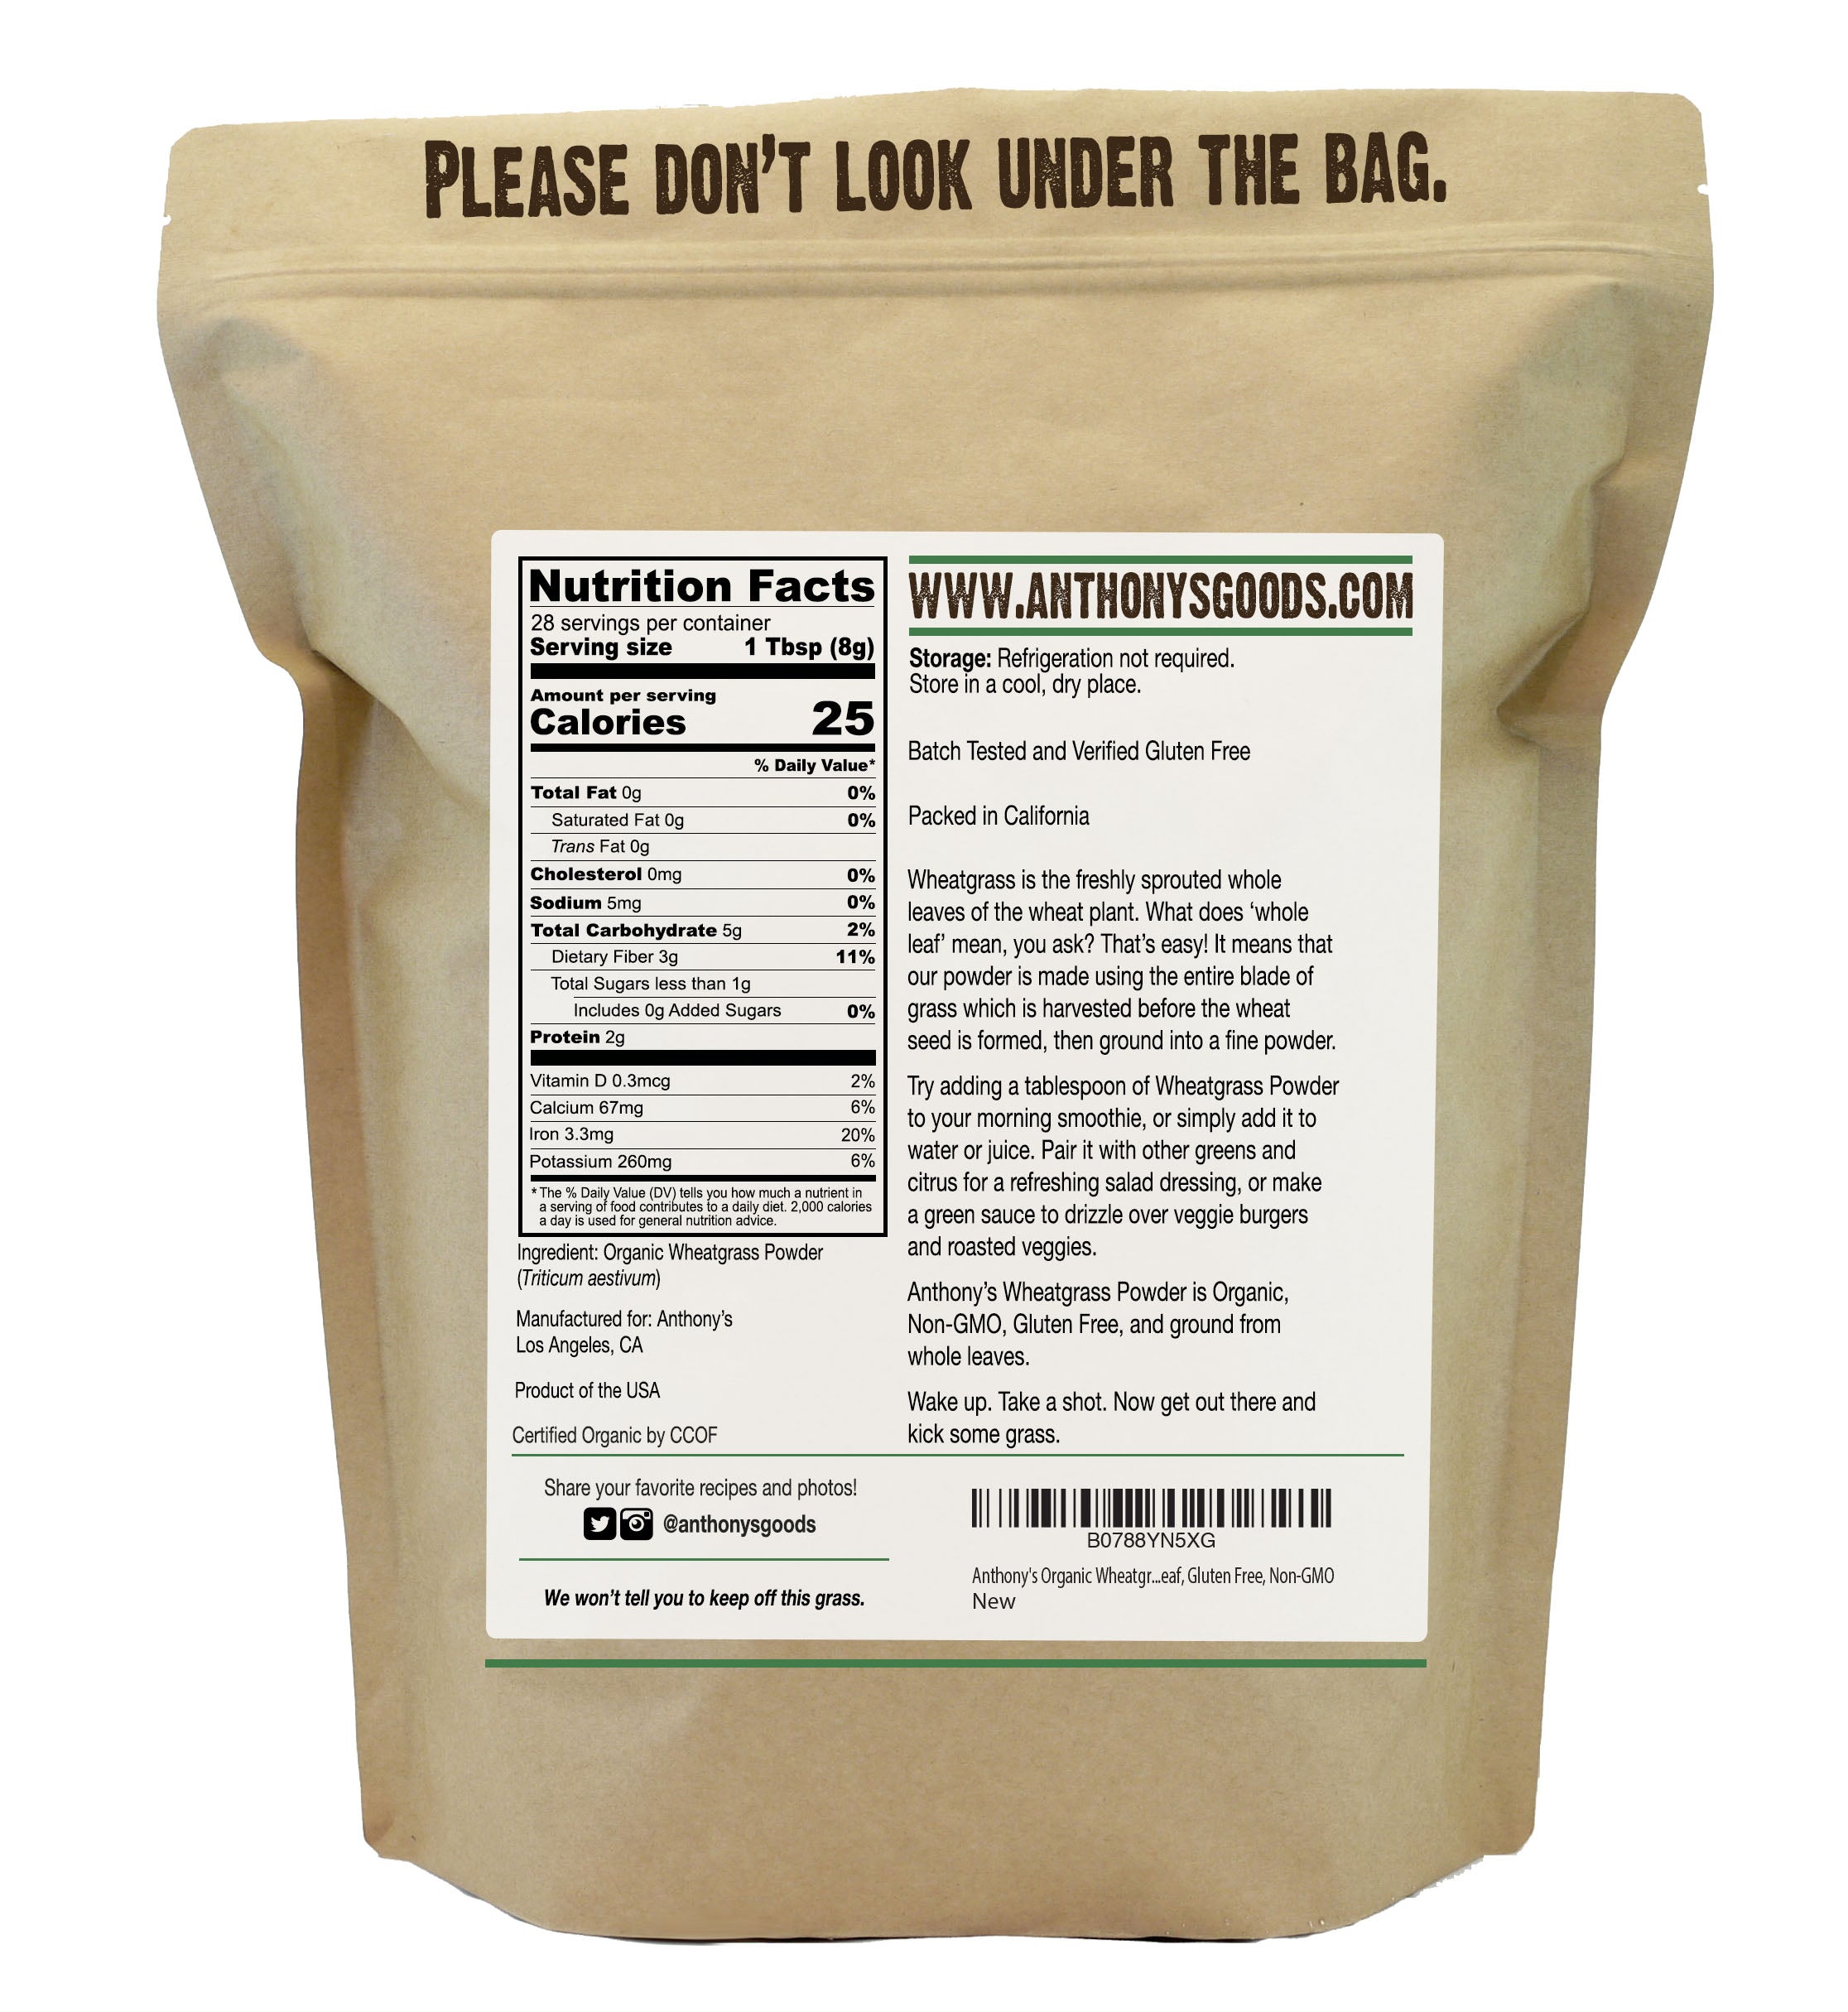 Organic Wheatgrass Powder: Gluten Free & Non-GMO